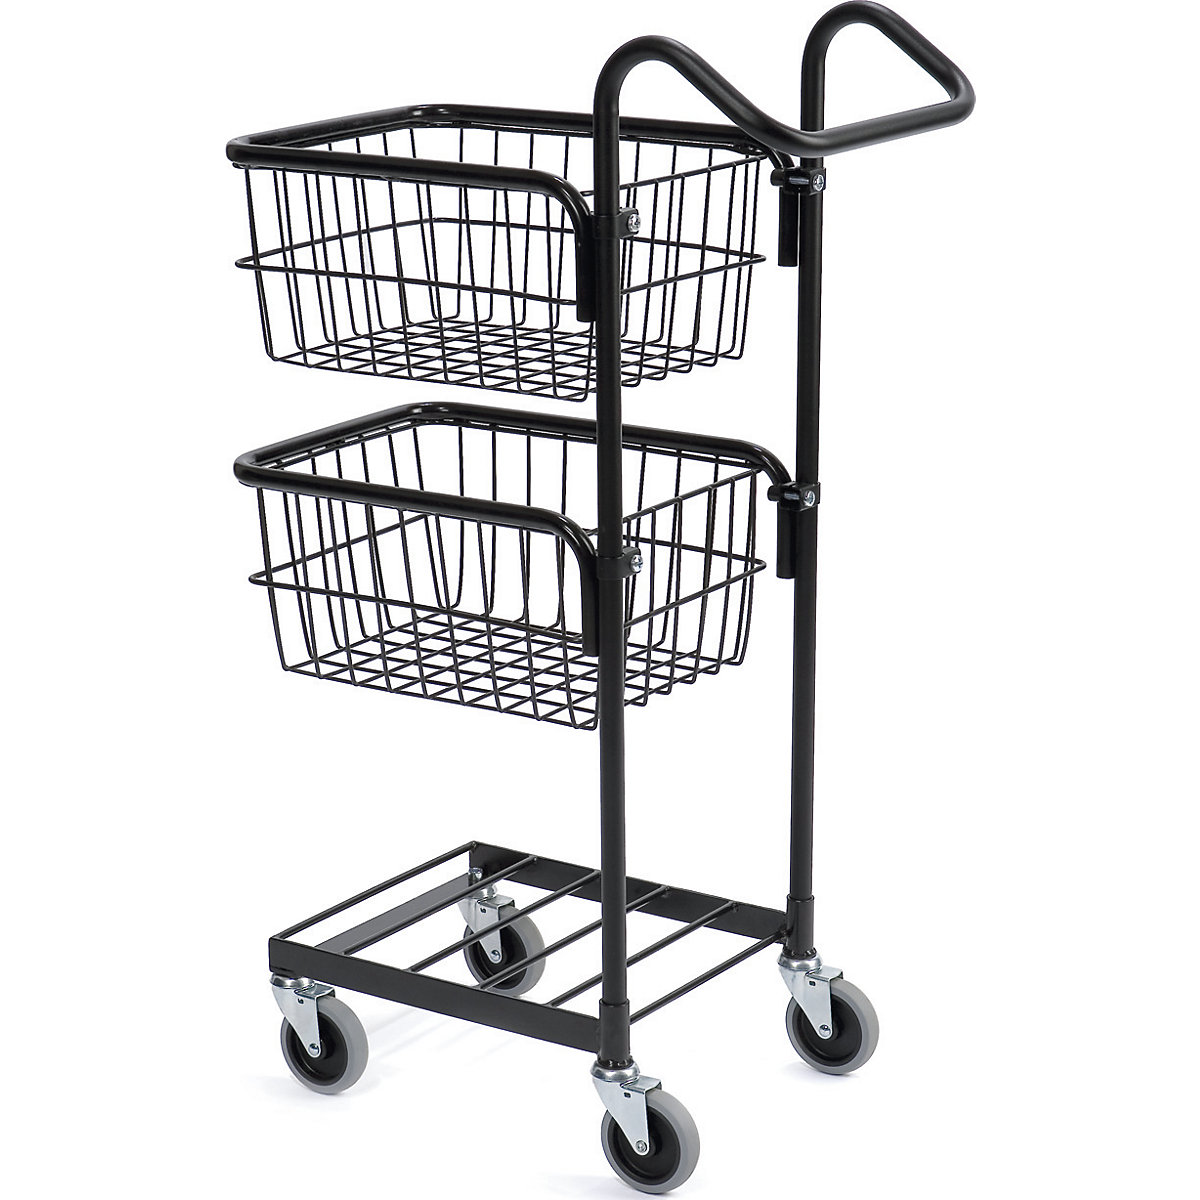 KOMPAKT retail bin – HelgeNyberg, 2 baskets, black frame, 5+ items-2